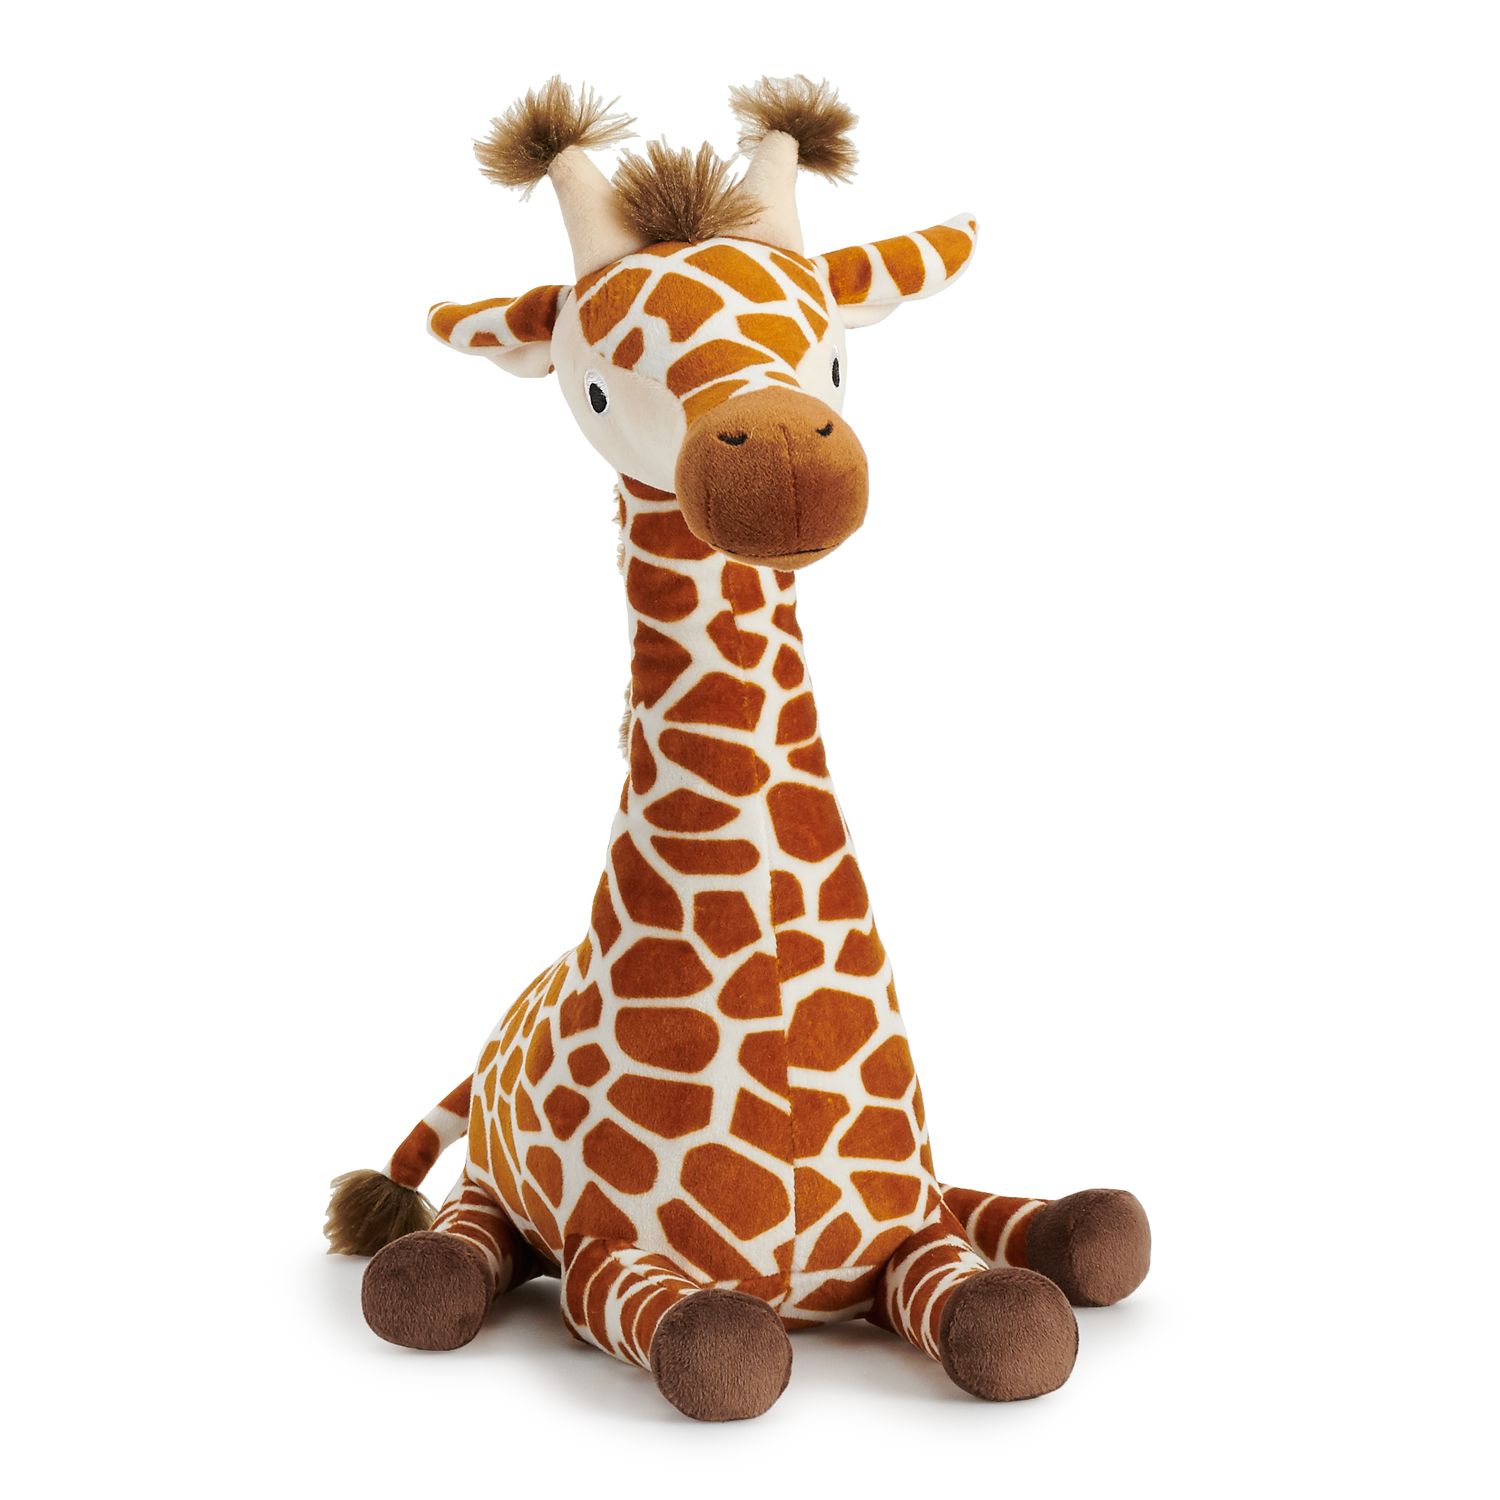 5ft giraffe stuffed animal